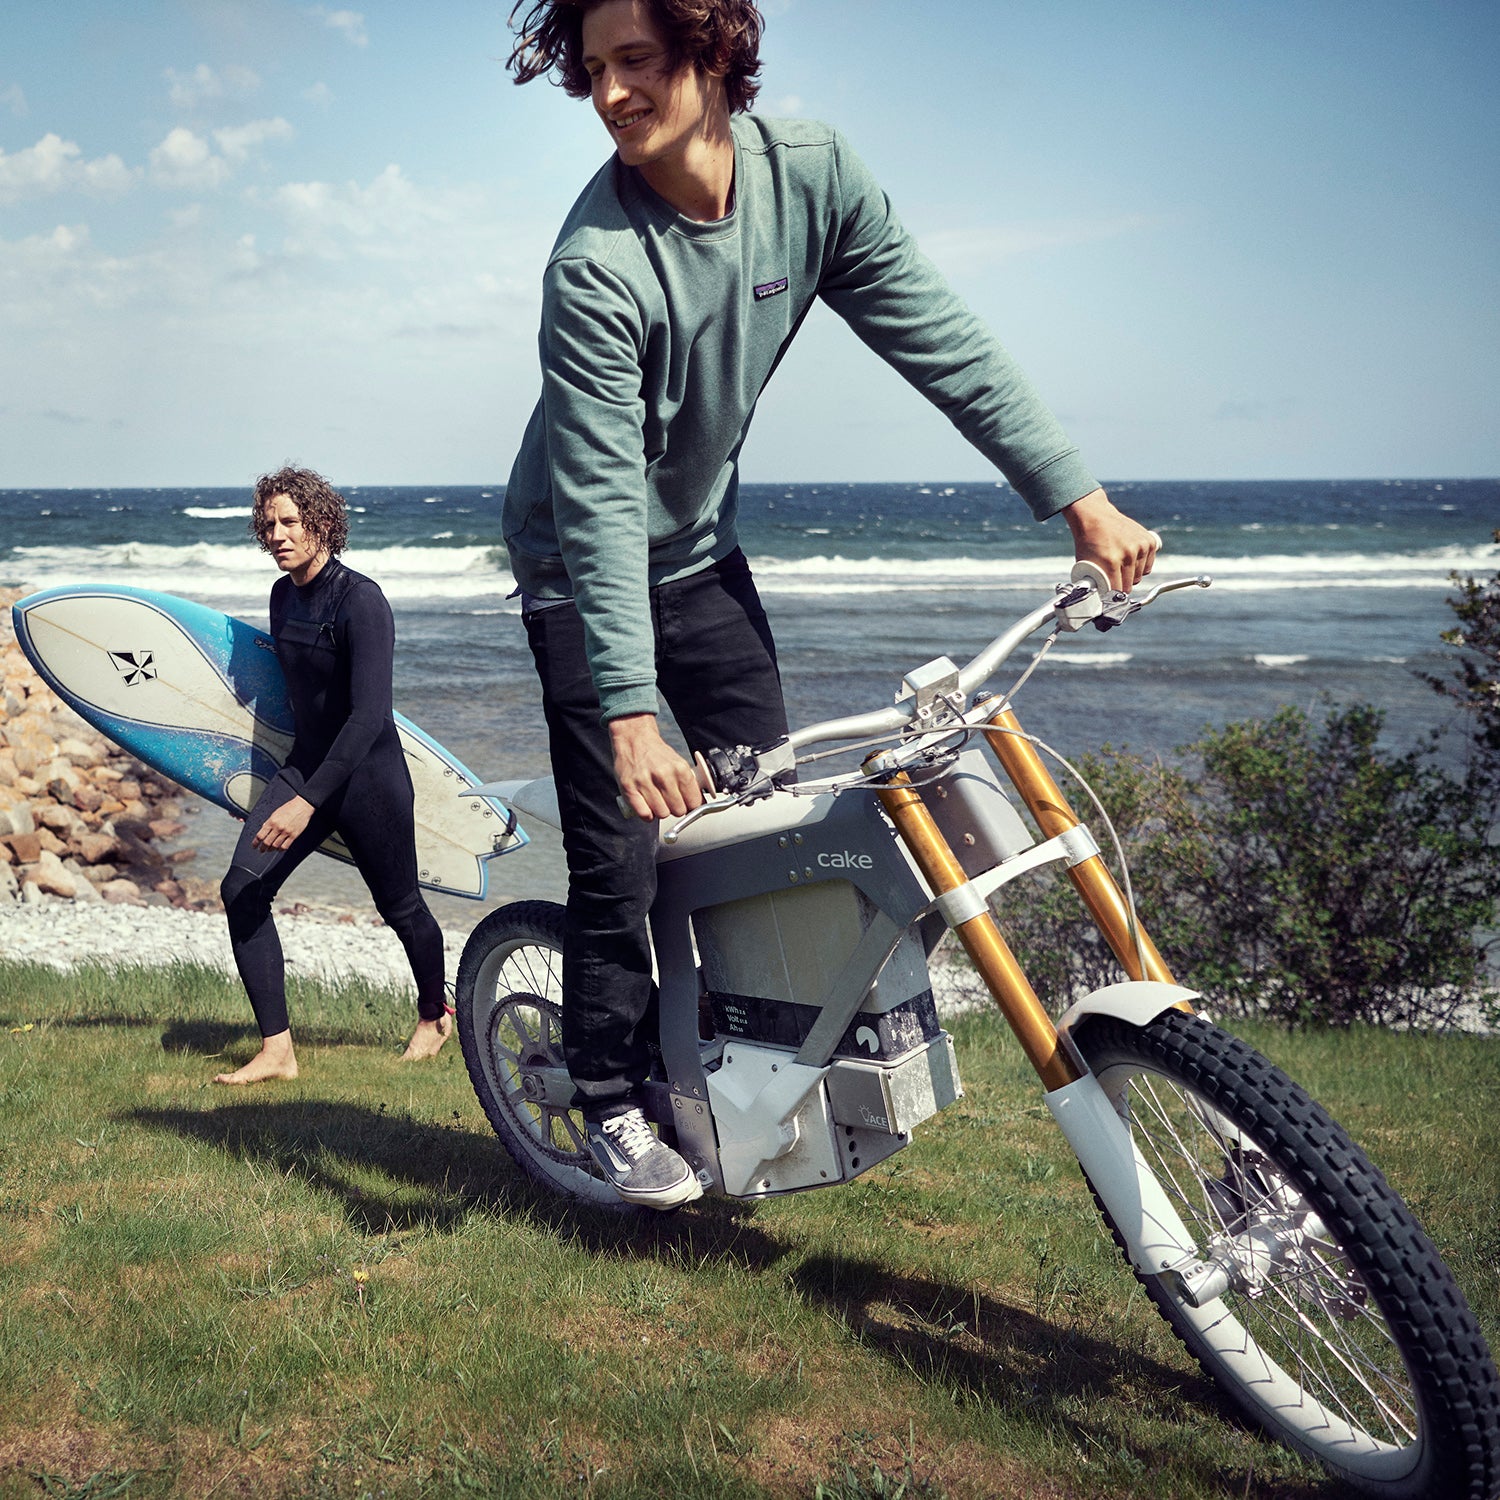 Swedish Electric Motorbike Company Cake Launches New Utility Bike -  Magnetic Magazine